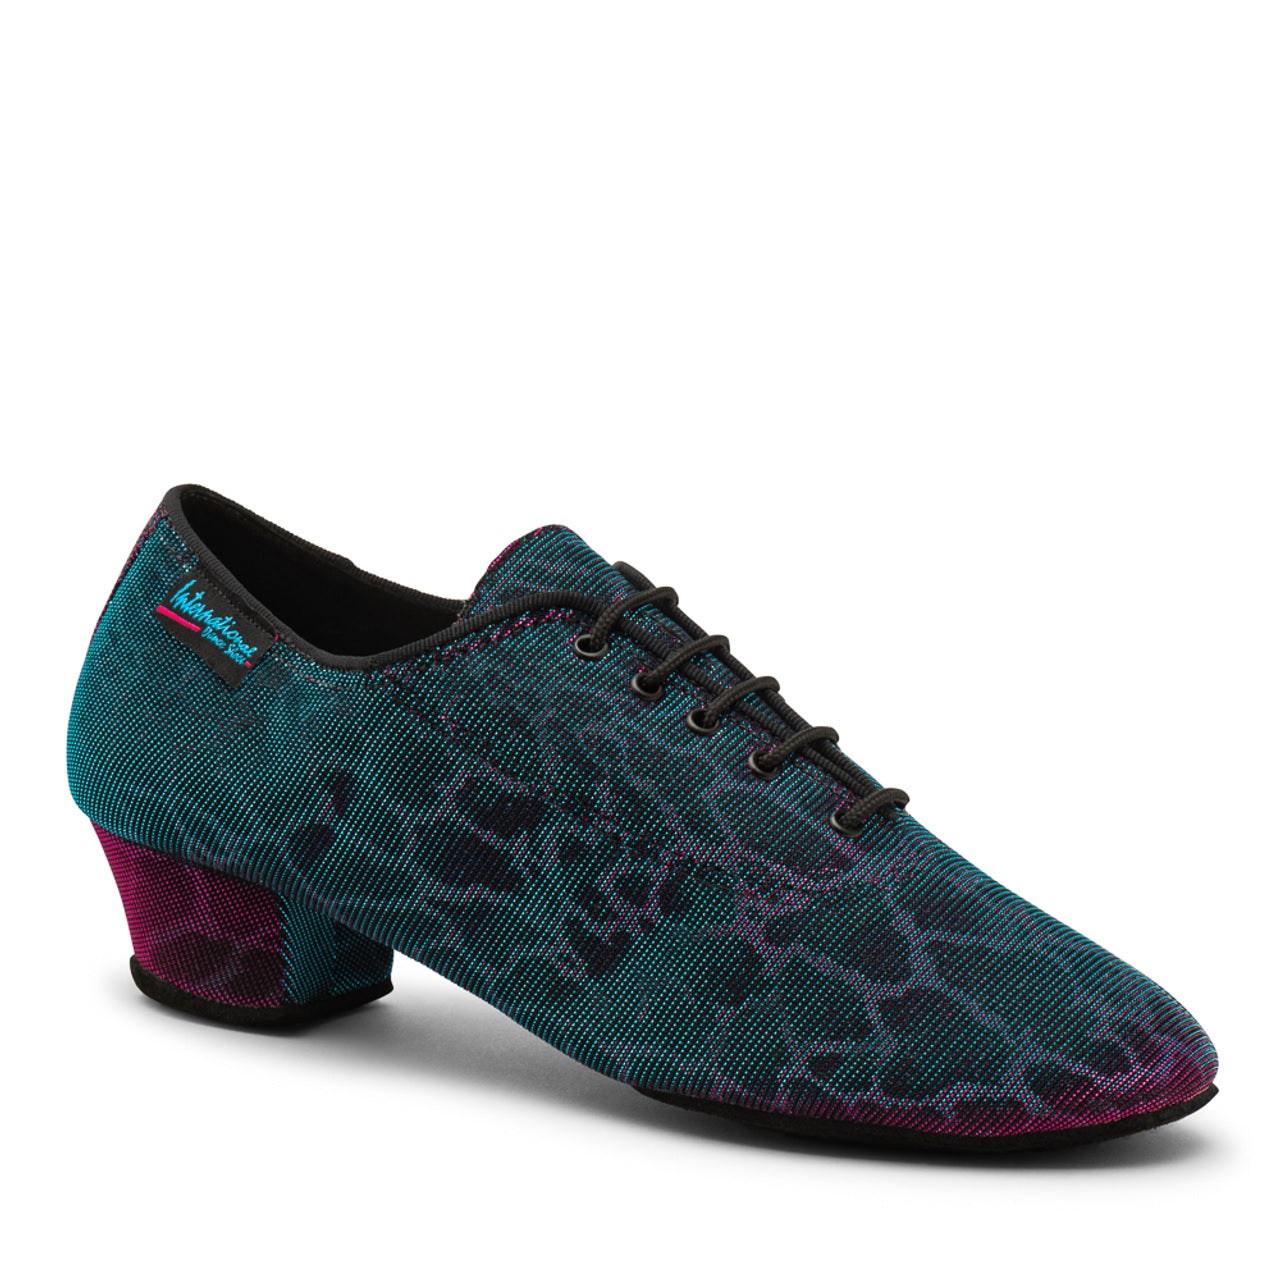 International Dance Shoes, Heather Split, Blue Pink Panther Print, 1.5” Heel